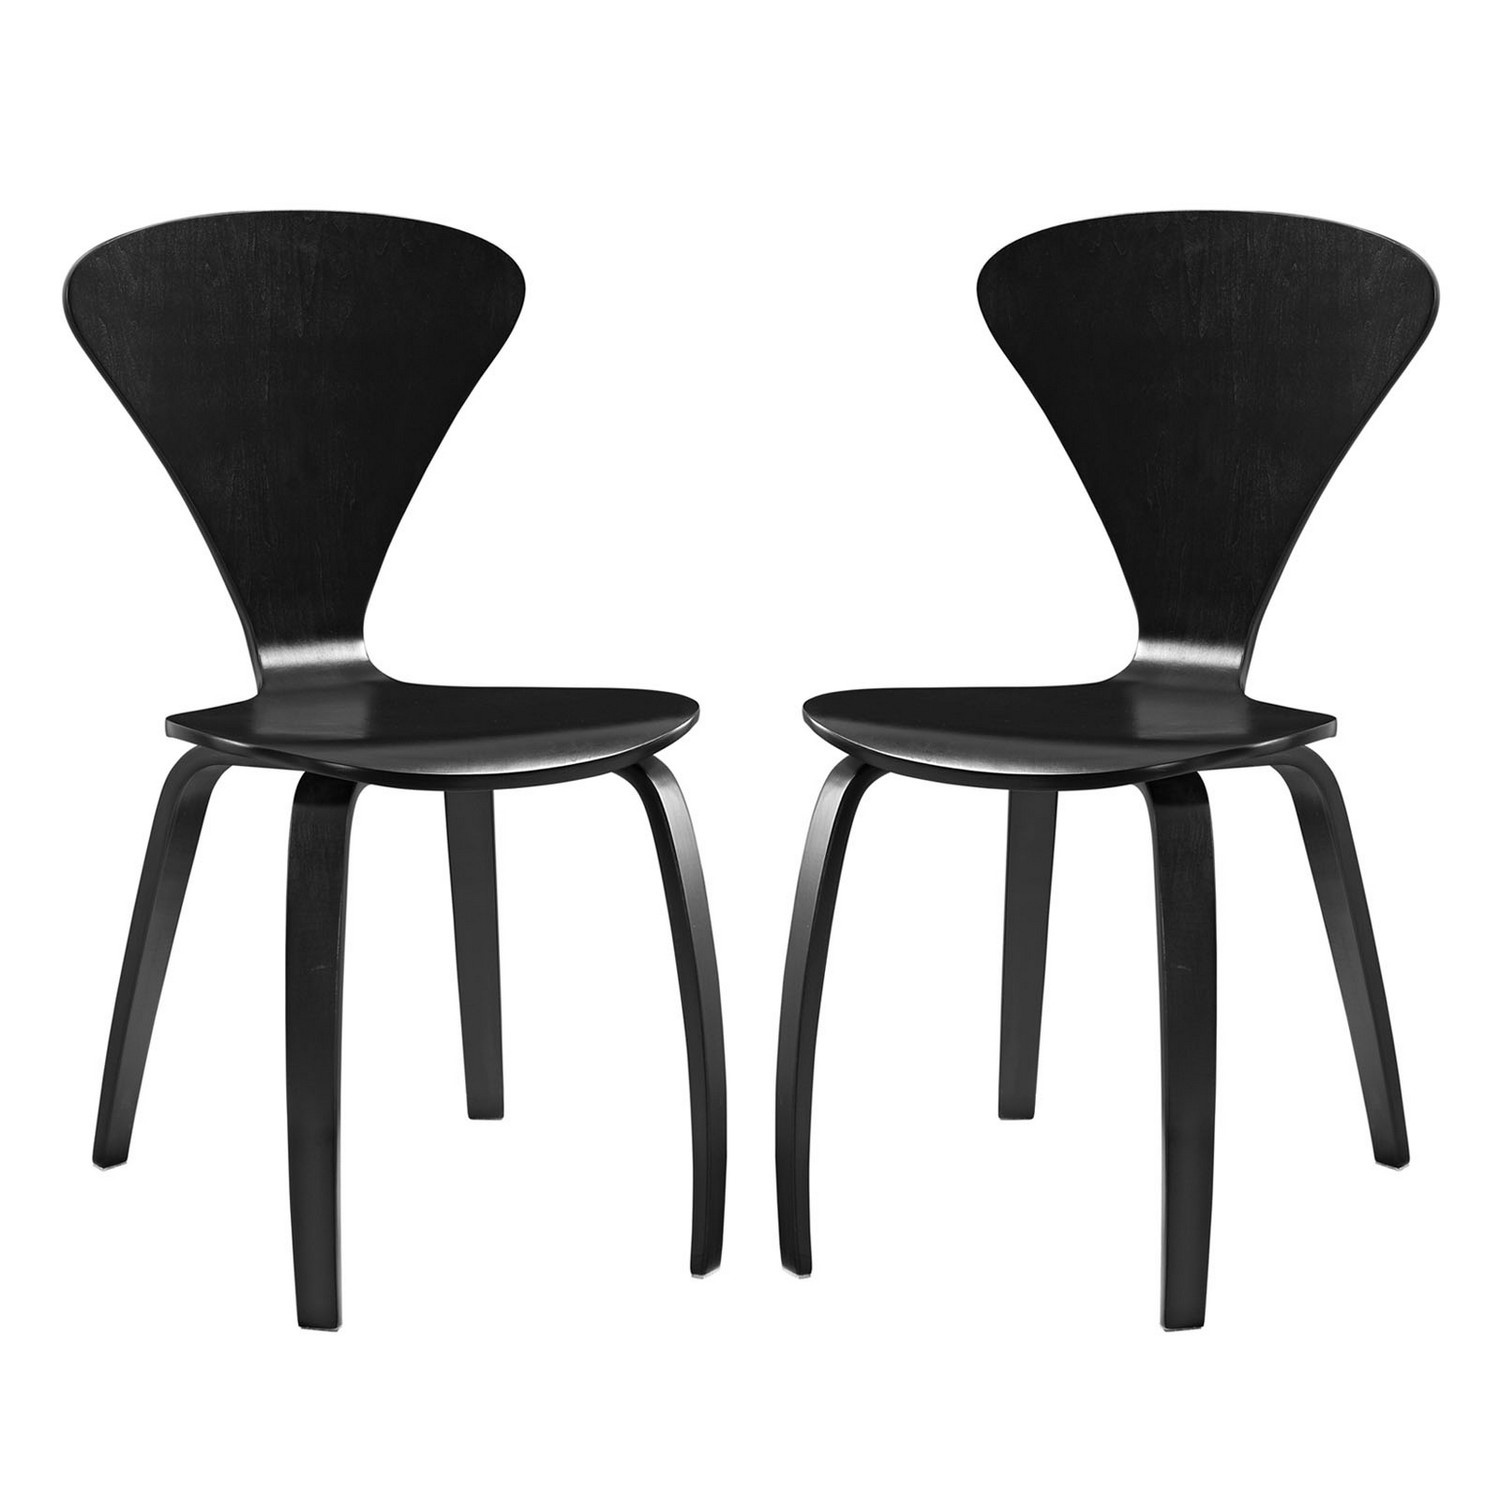 Modway Vortex Dining Chairs Set of 2 - Black